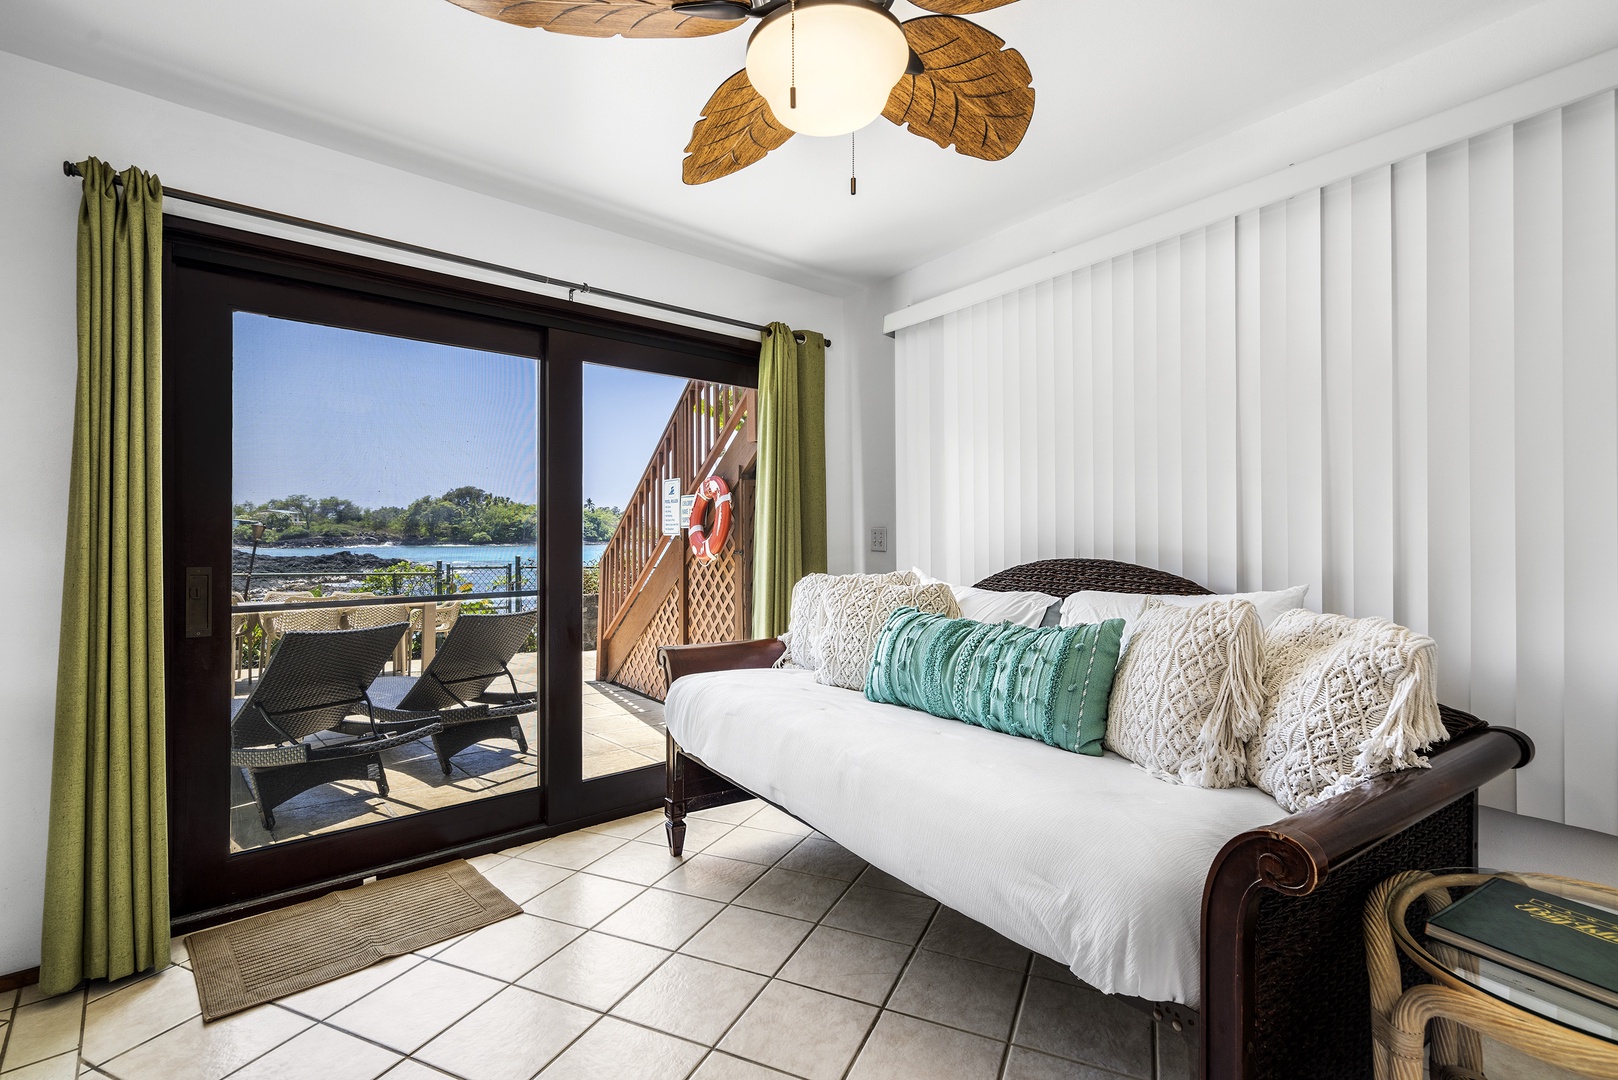 Kailua Kona Vacation Rentals, Kona's Shangri La - First floor day bed near the sliding door for Lanai access